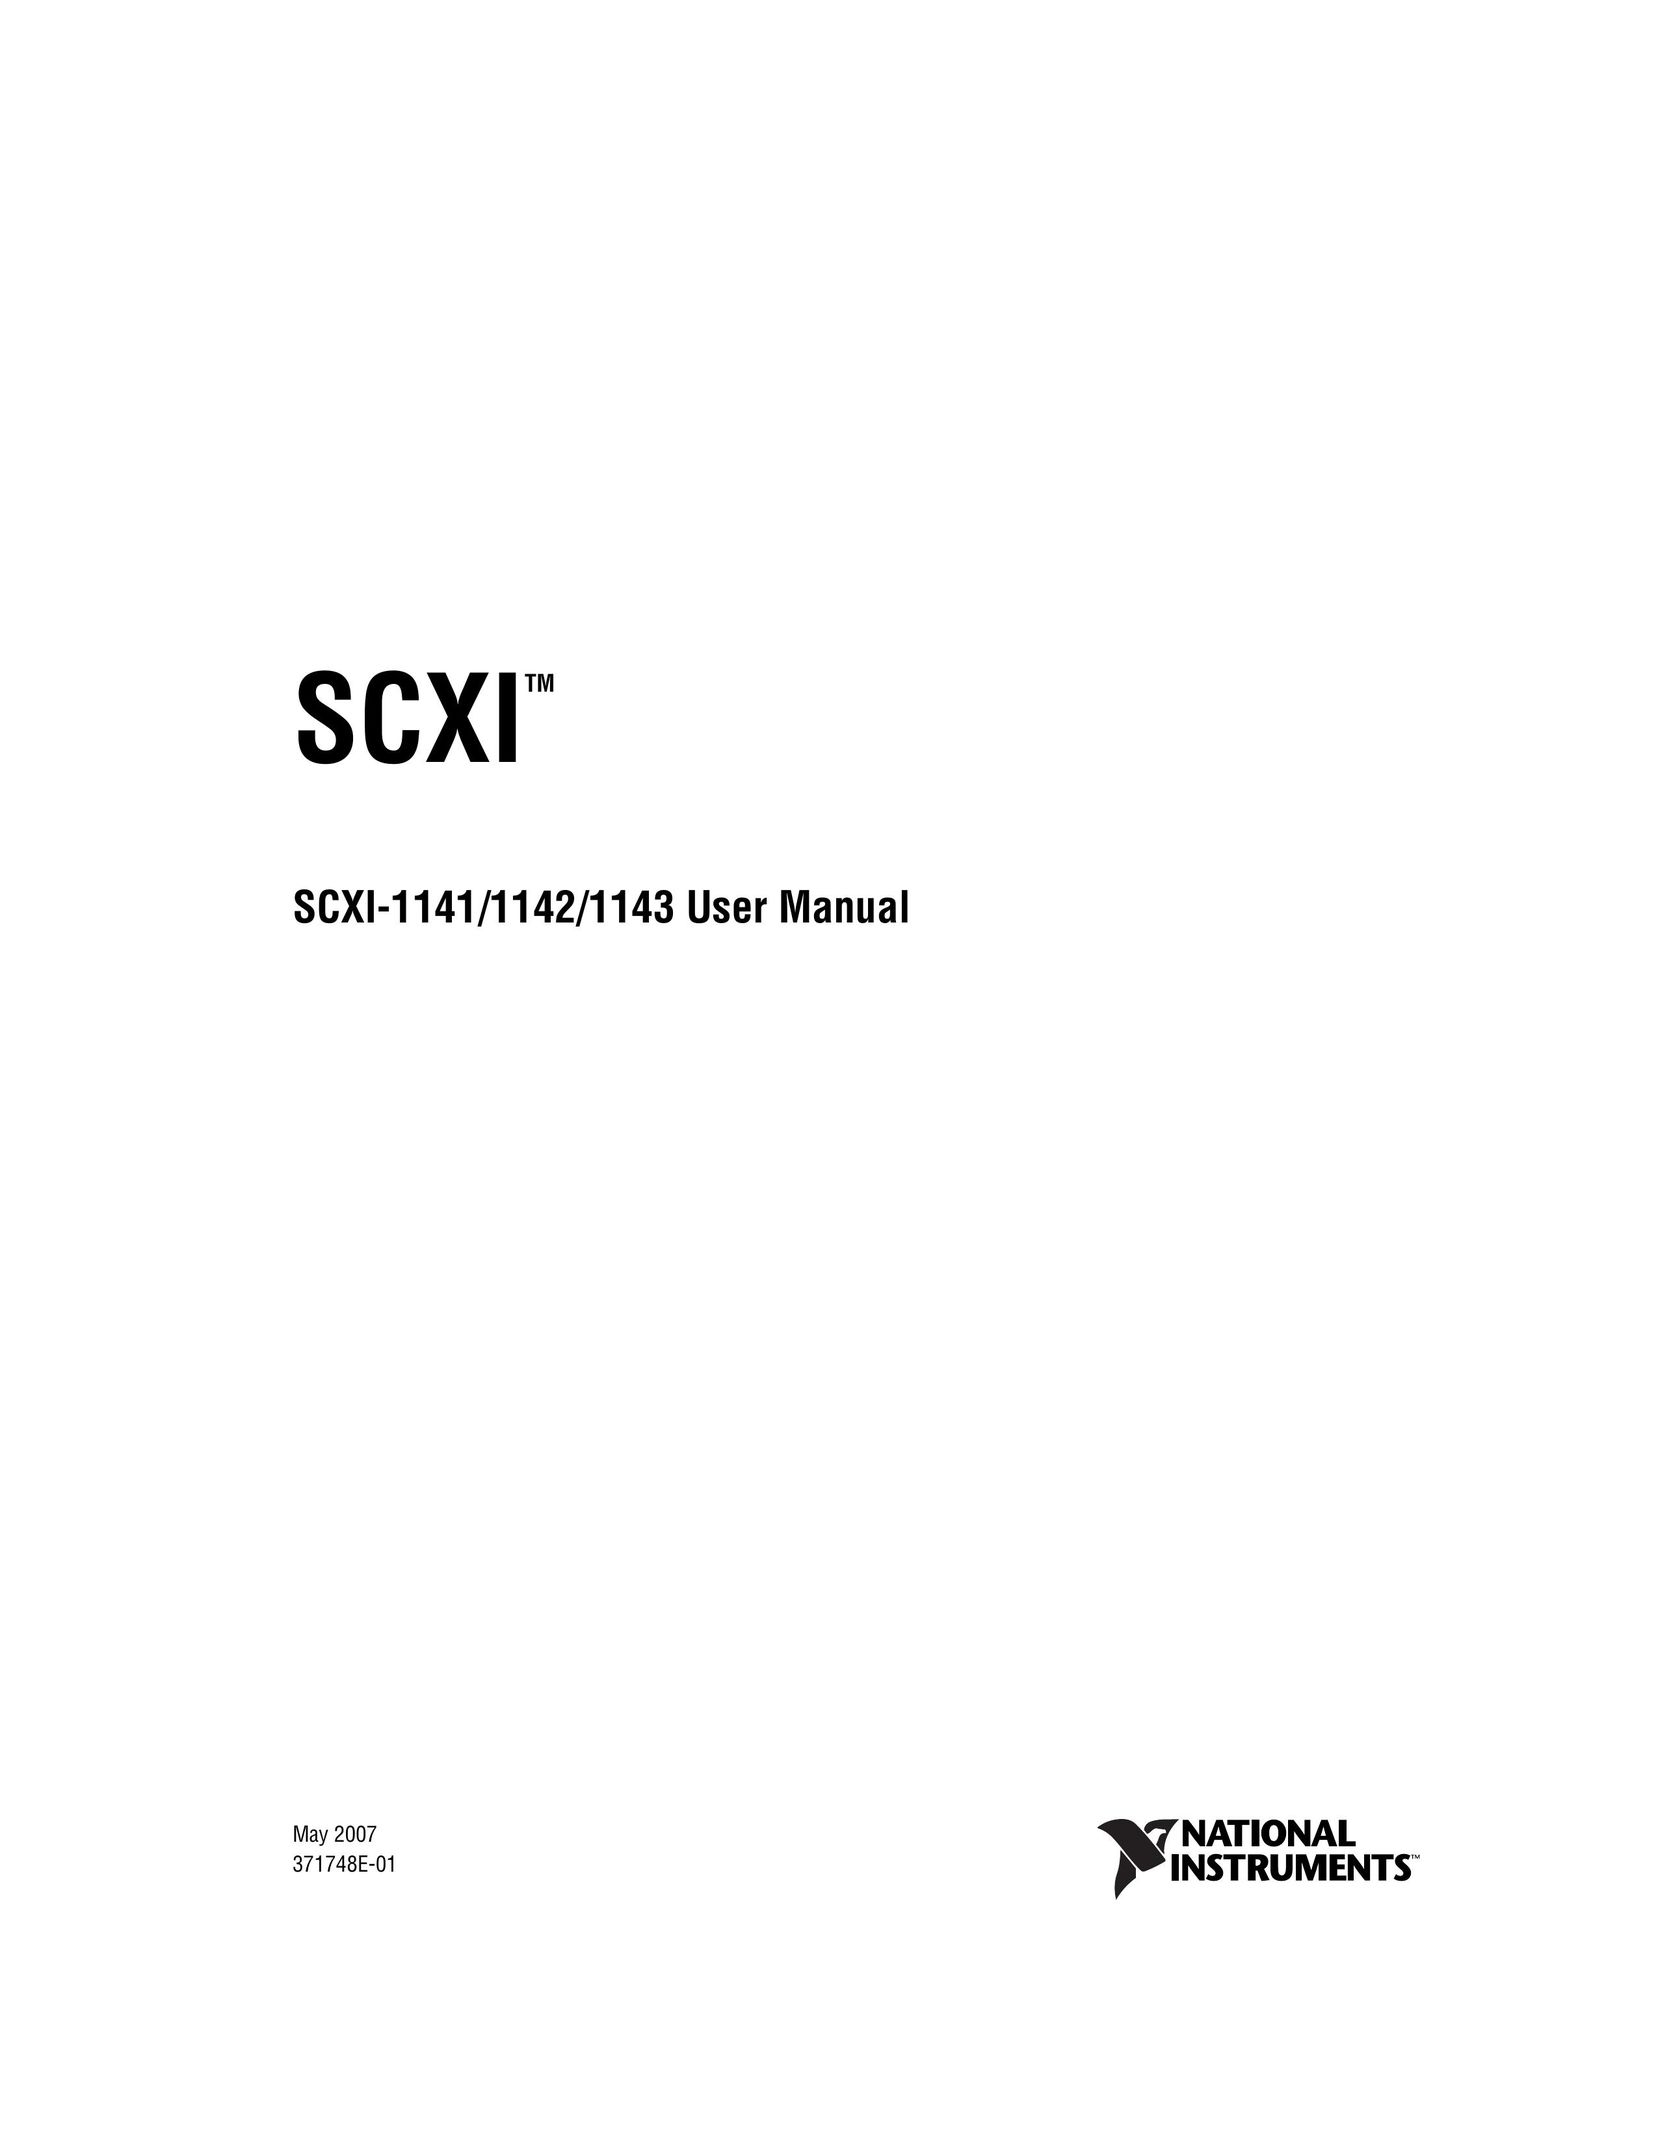 National Instruments SCXI Computer Hardware User Manual